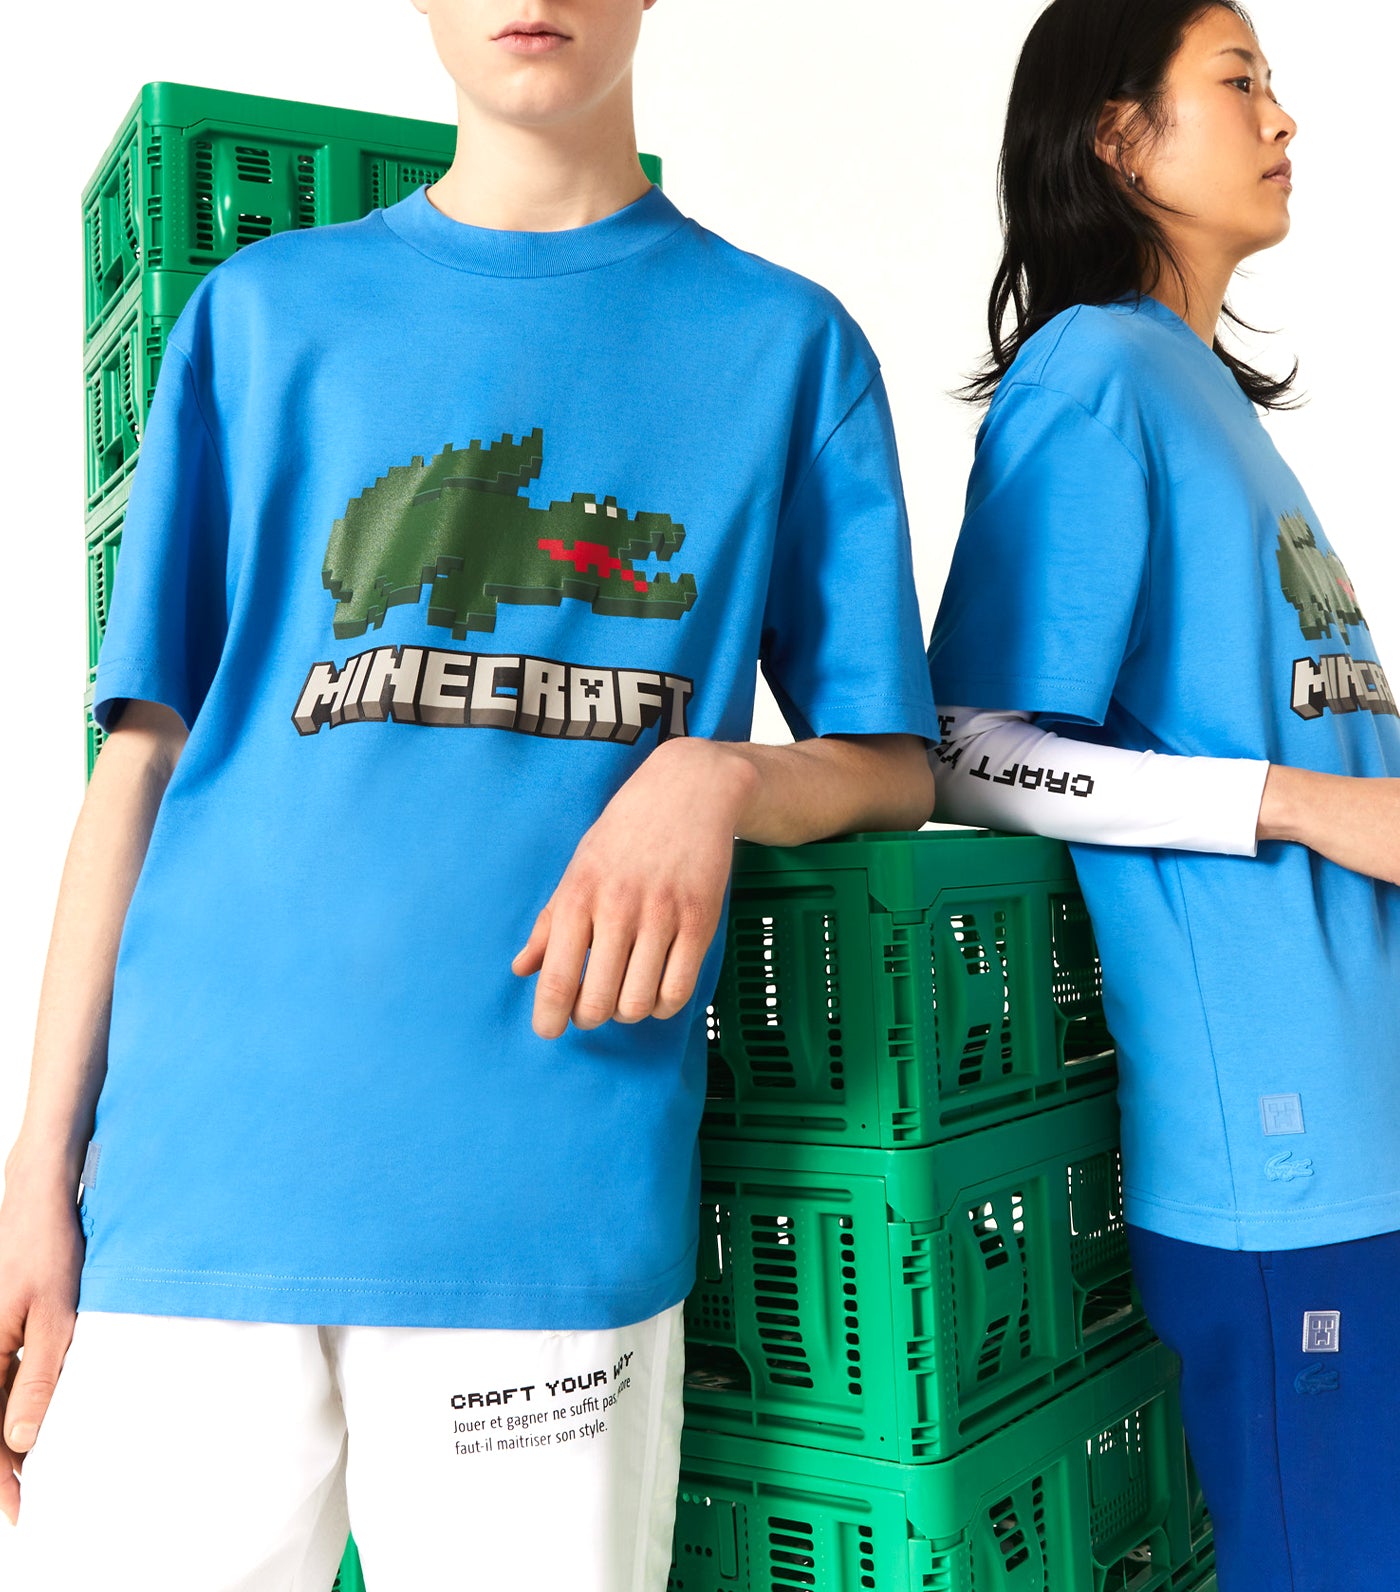 Men's Lacoste x Minecraft Print Short Stretch Cotton Trunks